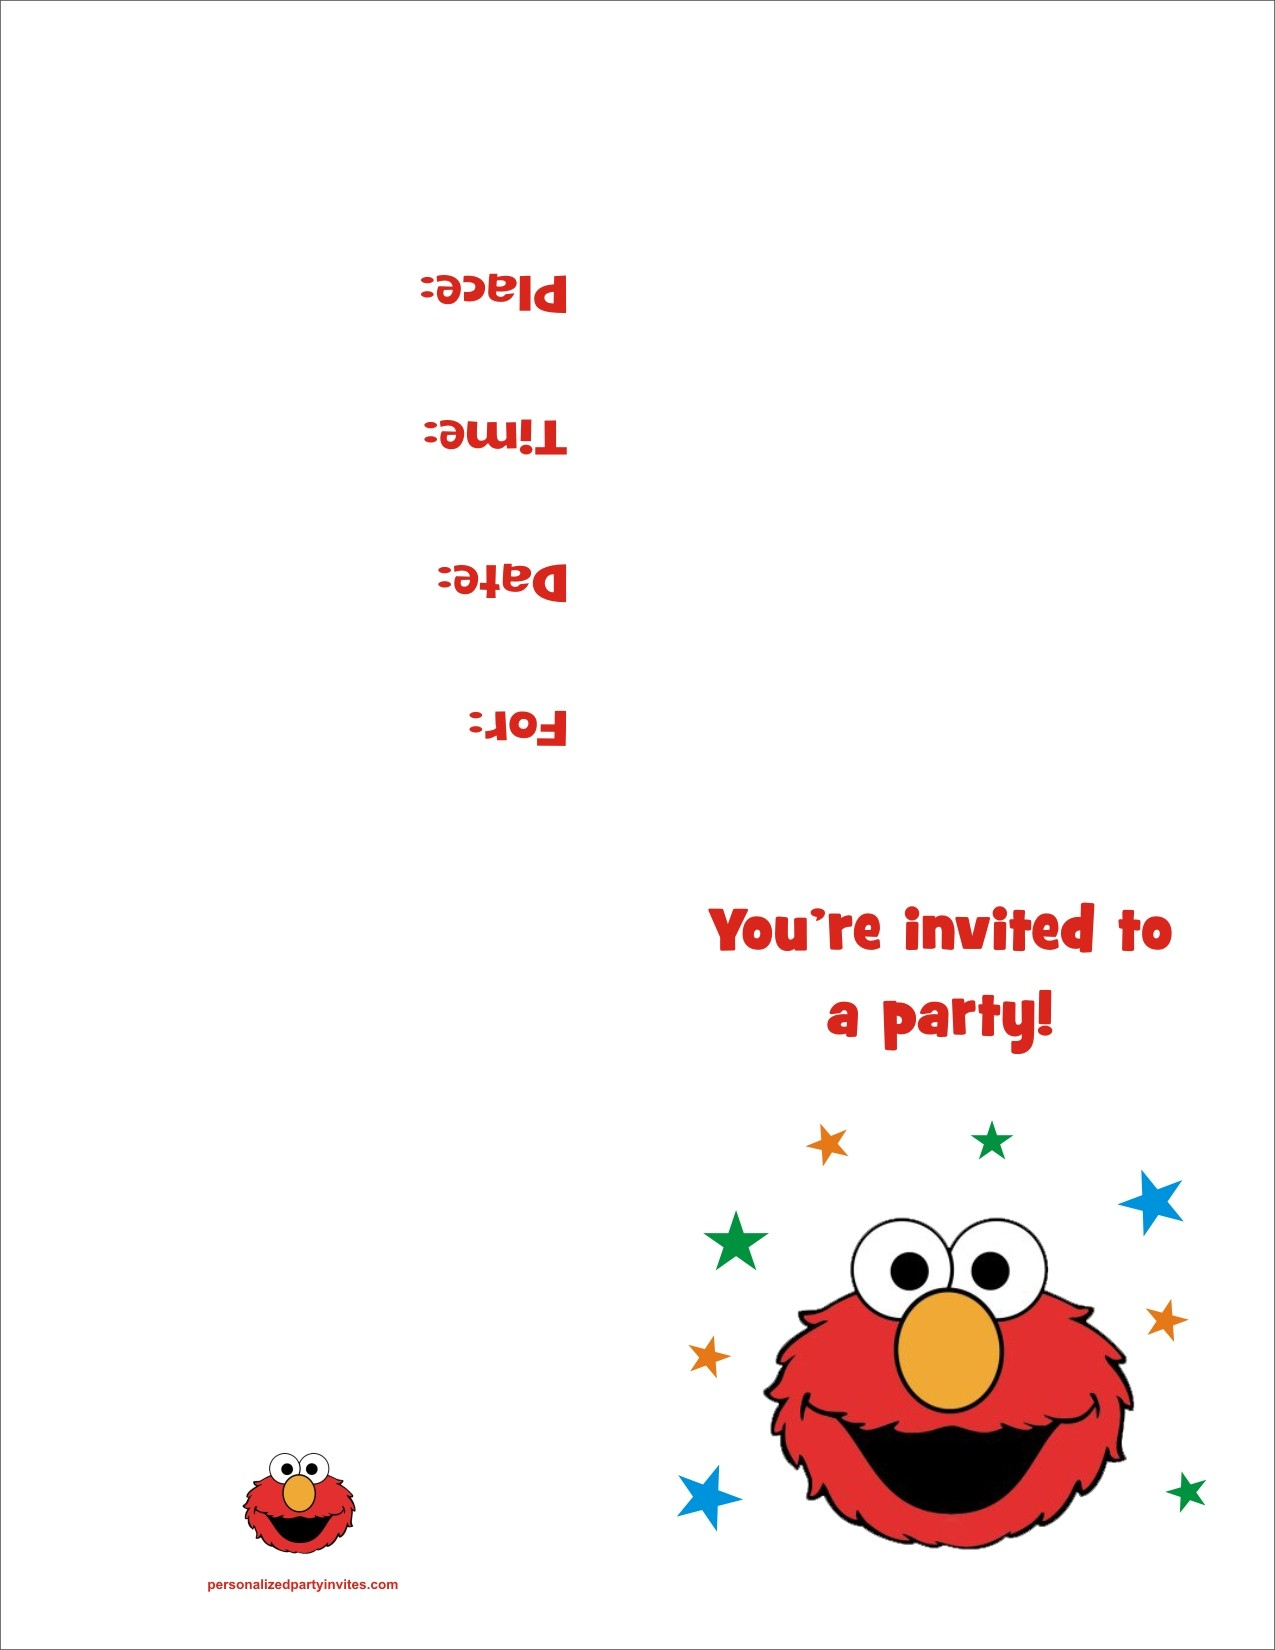 Elmo FREE Printable Birthday Party Invitation Personalized Party Invites